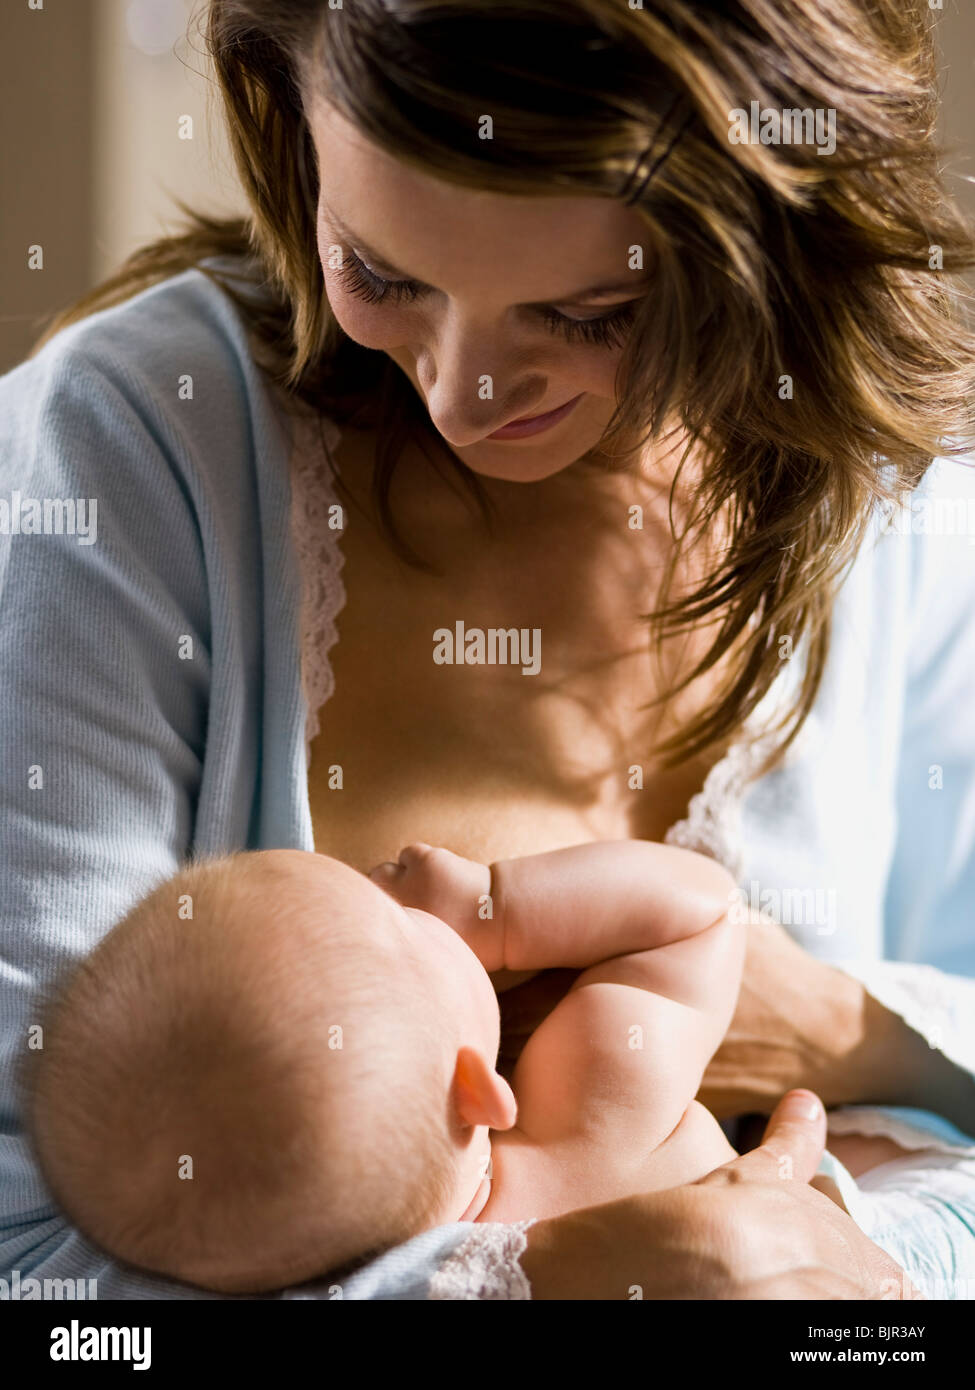 woman nursing her baby. Stock Photo